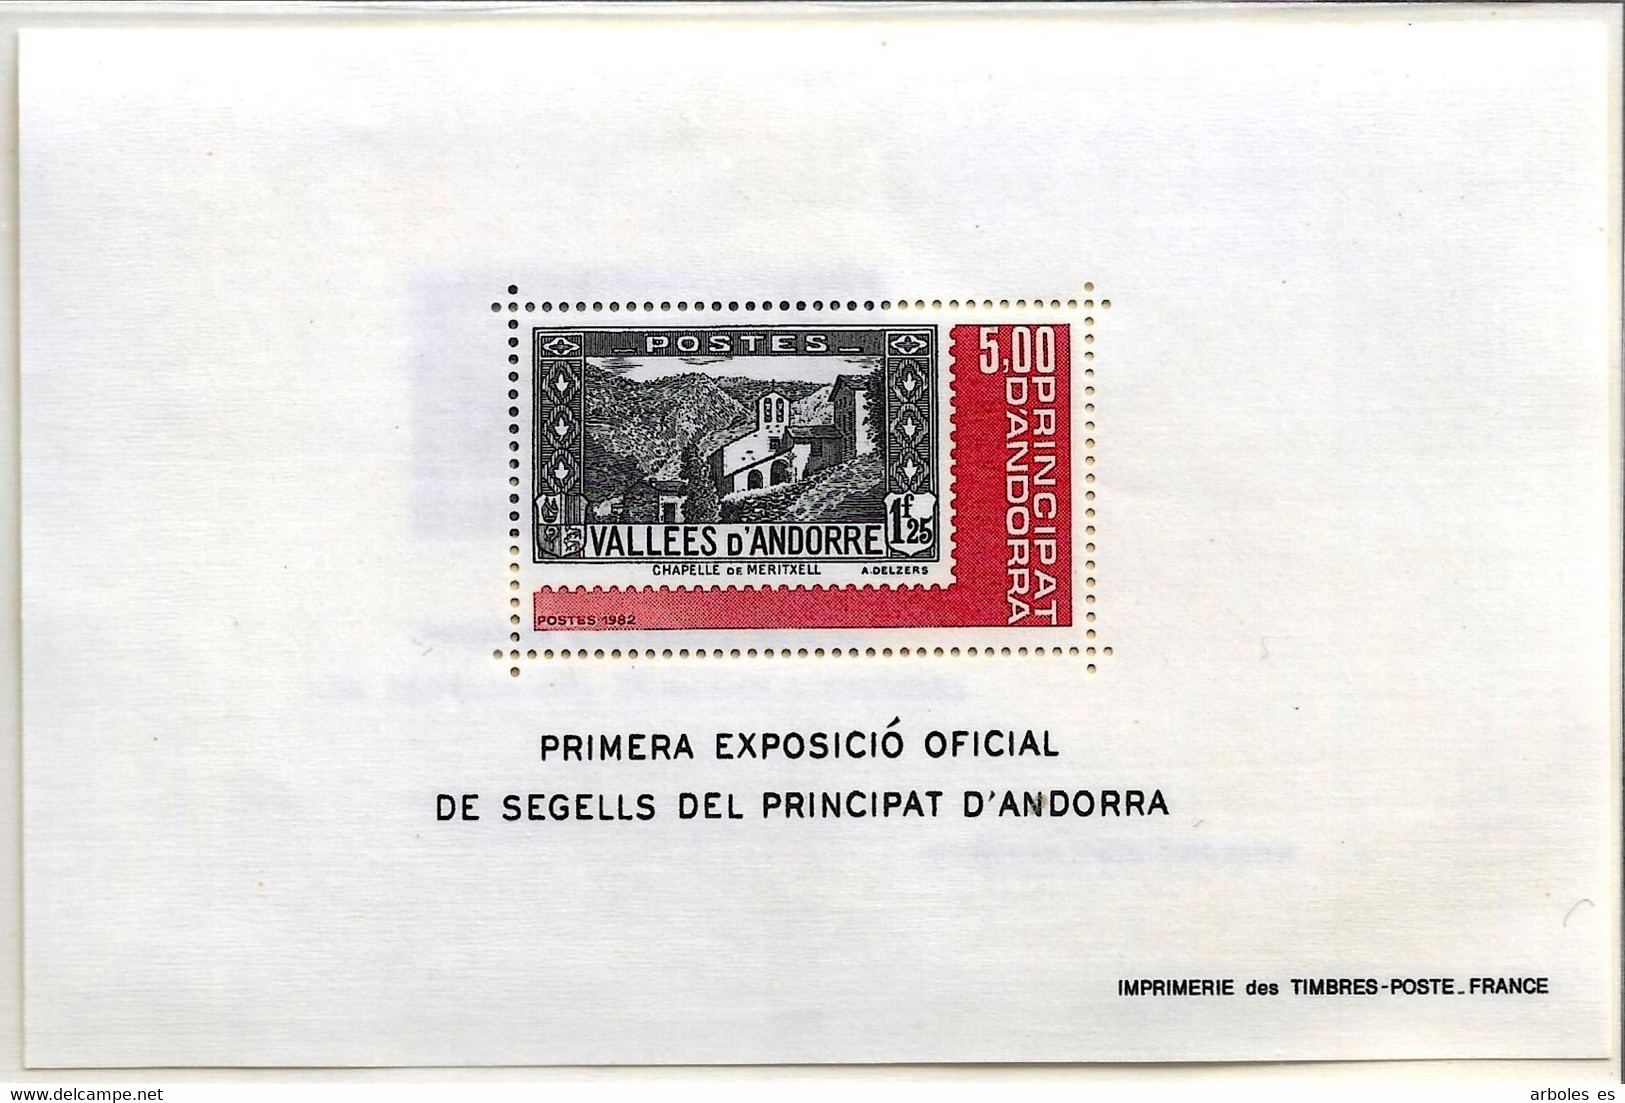 ANDORRA FRANCESA - EXPOSICION FALATELICA - AÑO 1982 - Nº CATALOGO YVERT 0001 - NUEVOS - Blocks & Sheetlets